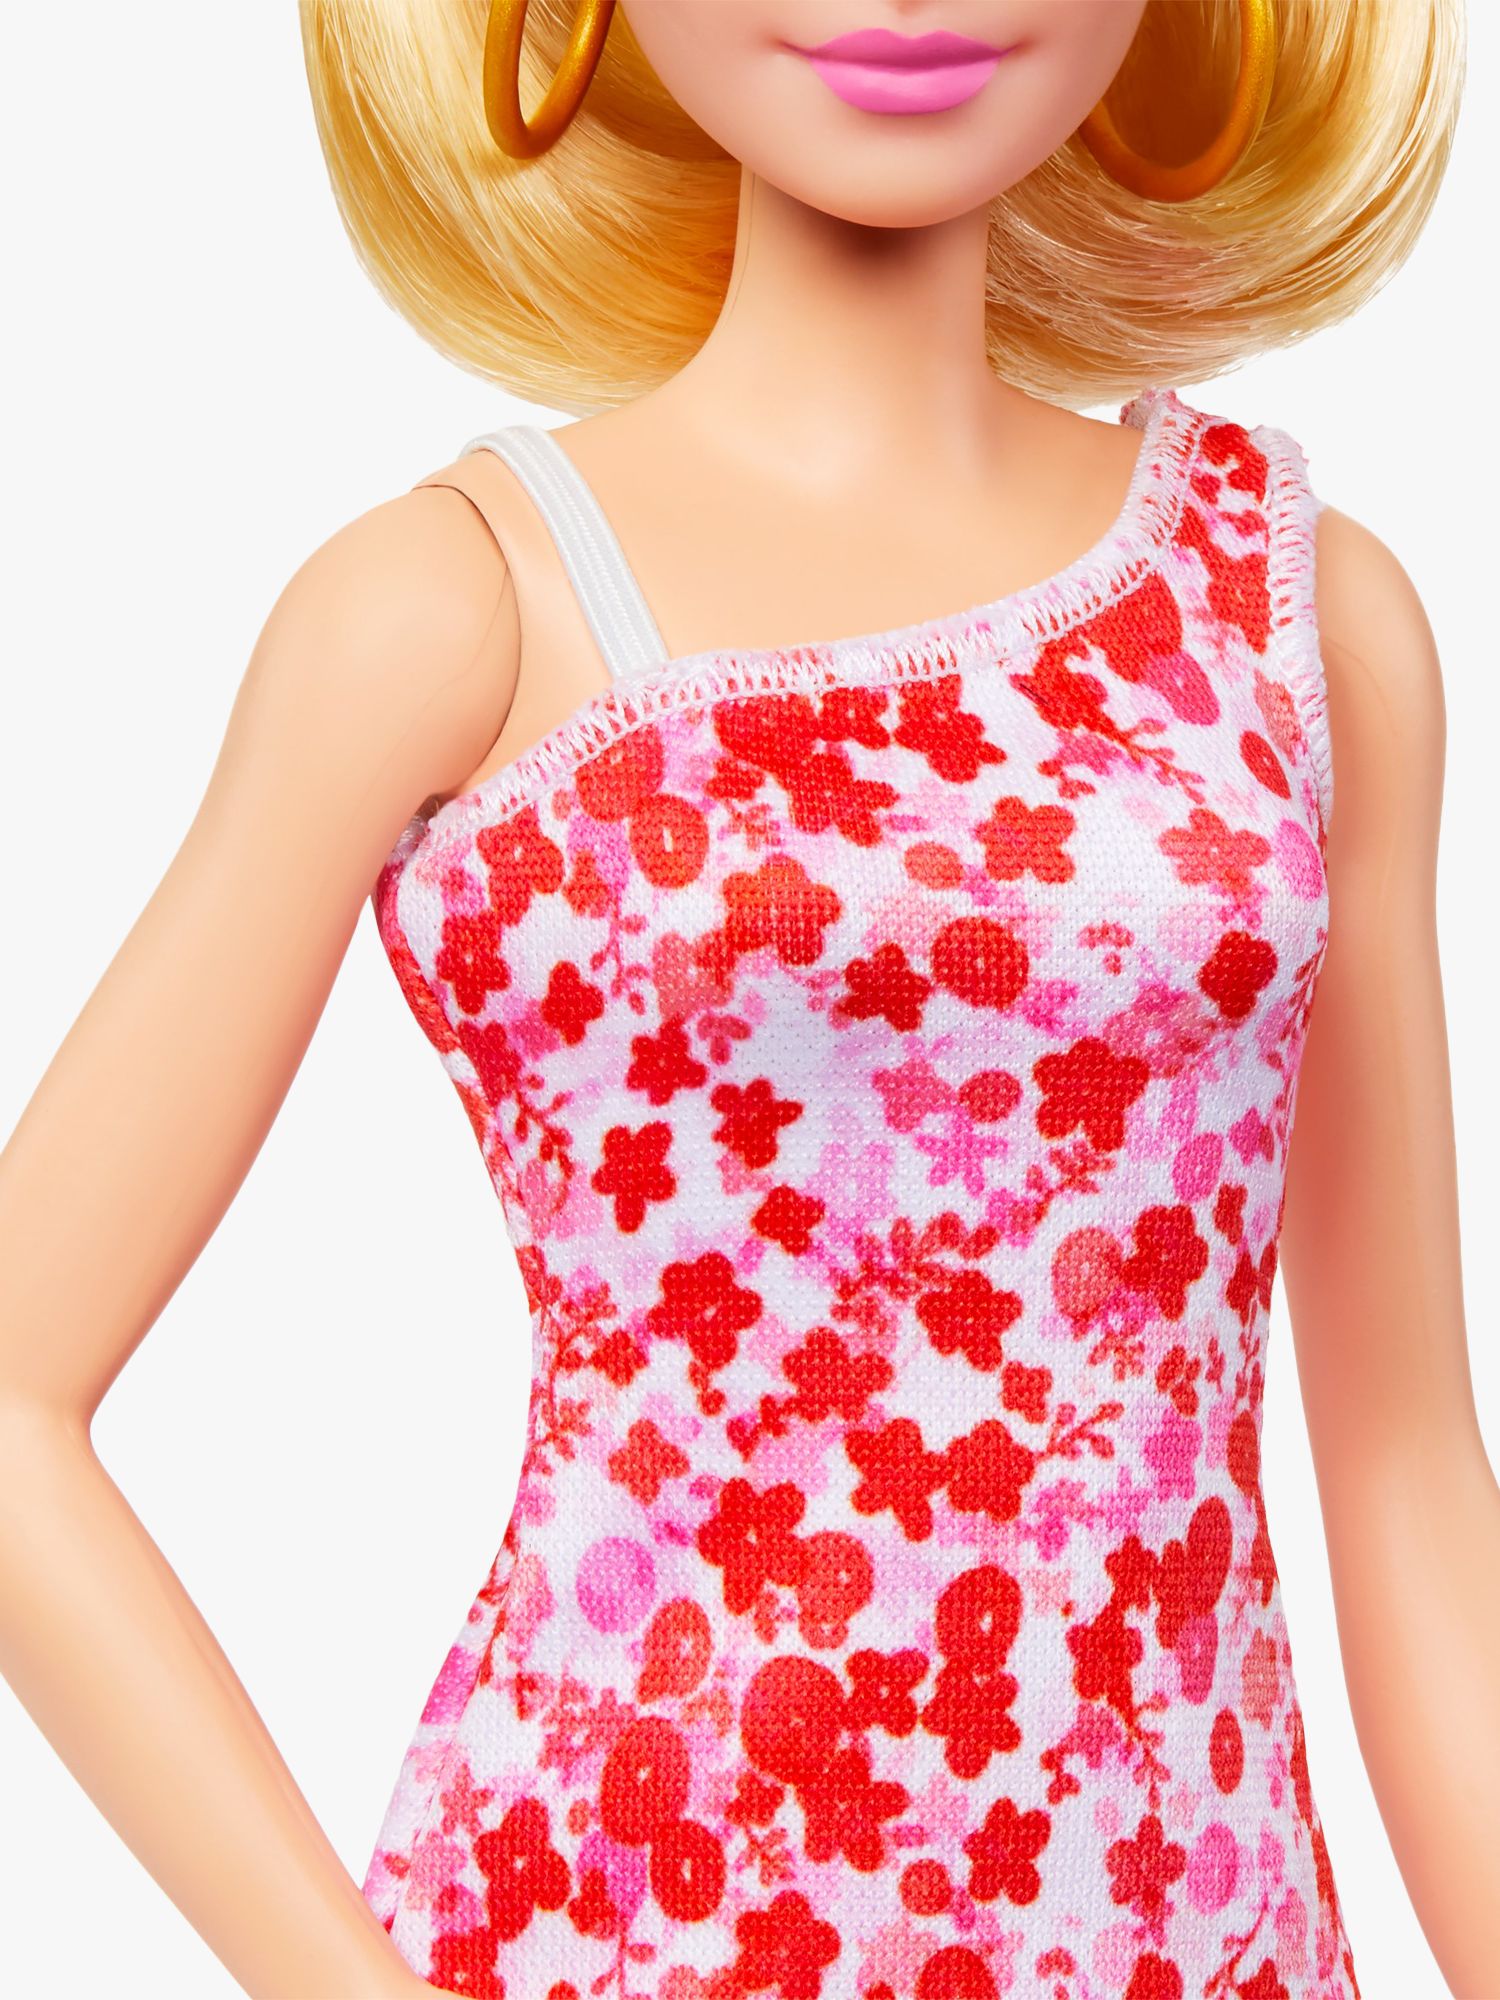 30 DIY Barbie Doll Hacks- Barbie underwear dressing sets 